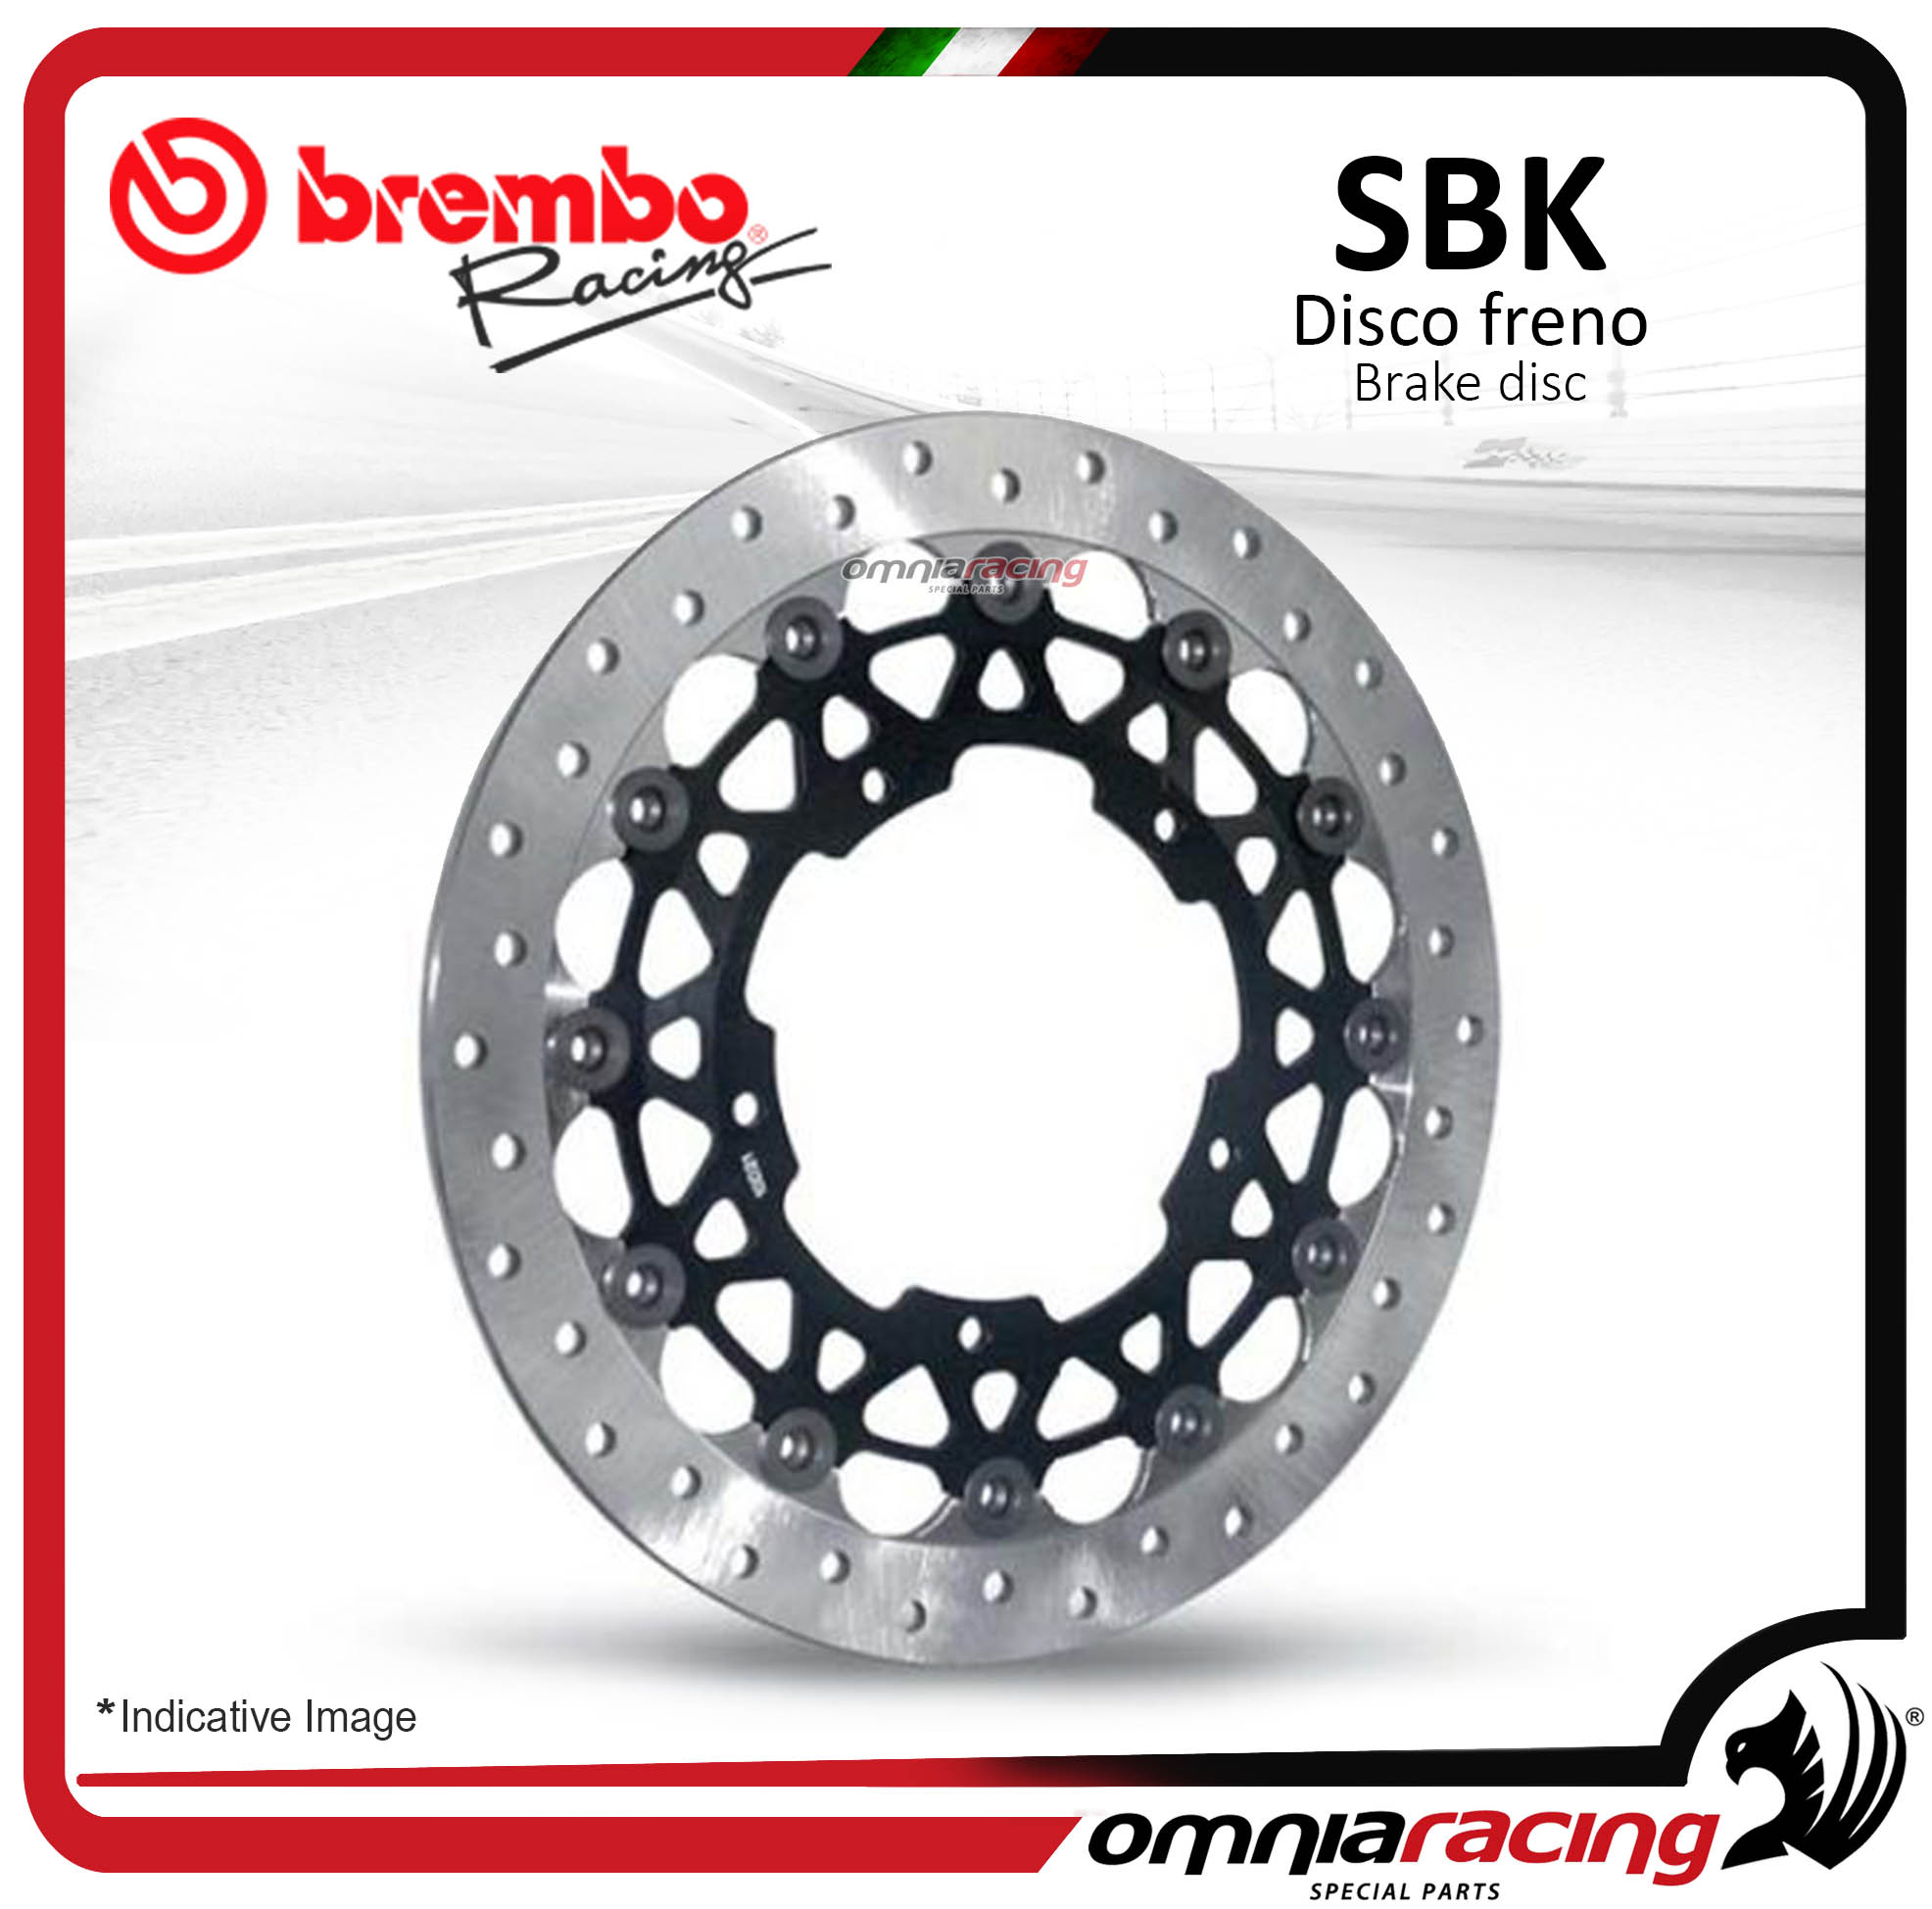 Disco Freno SBK Brembo Racing fascia frenante 30mm spessore 6mm BMW HP4 HP 4